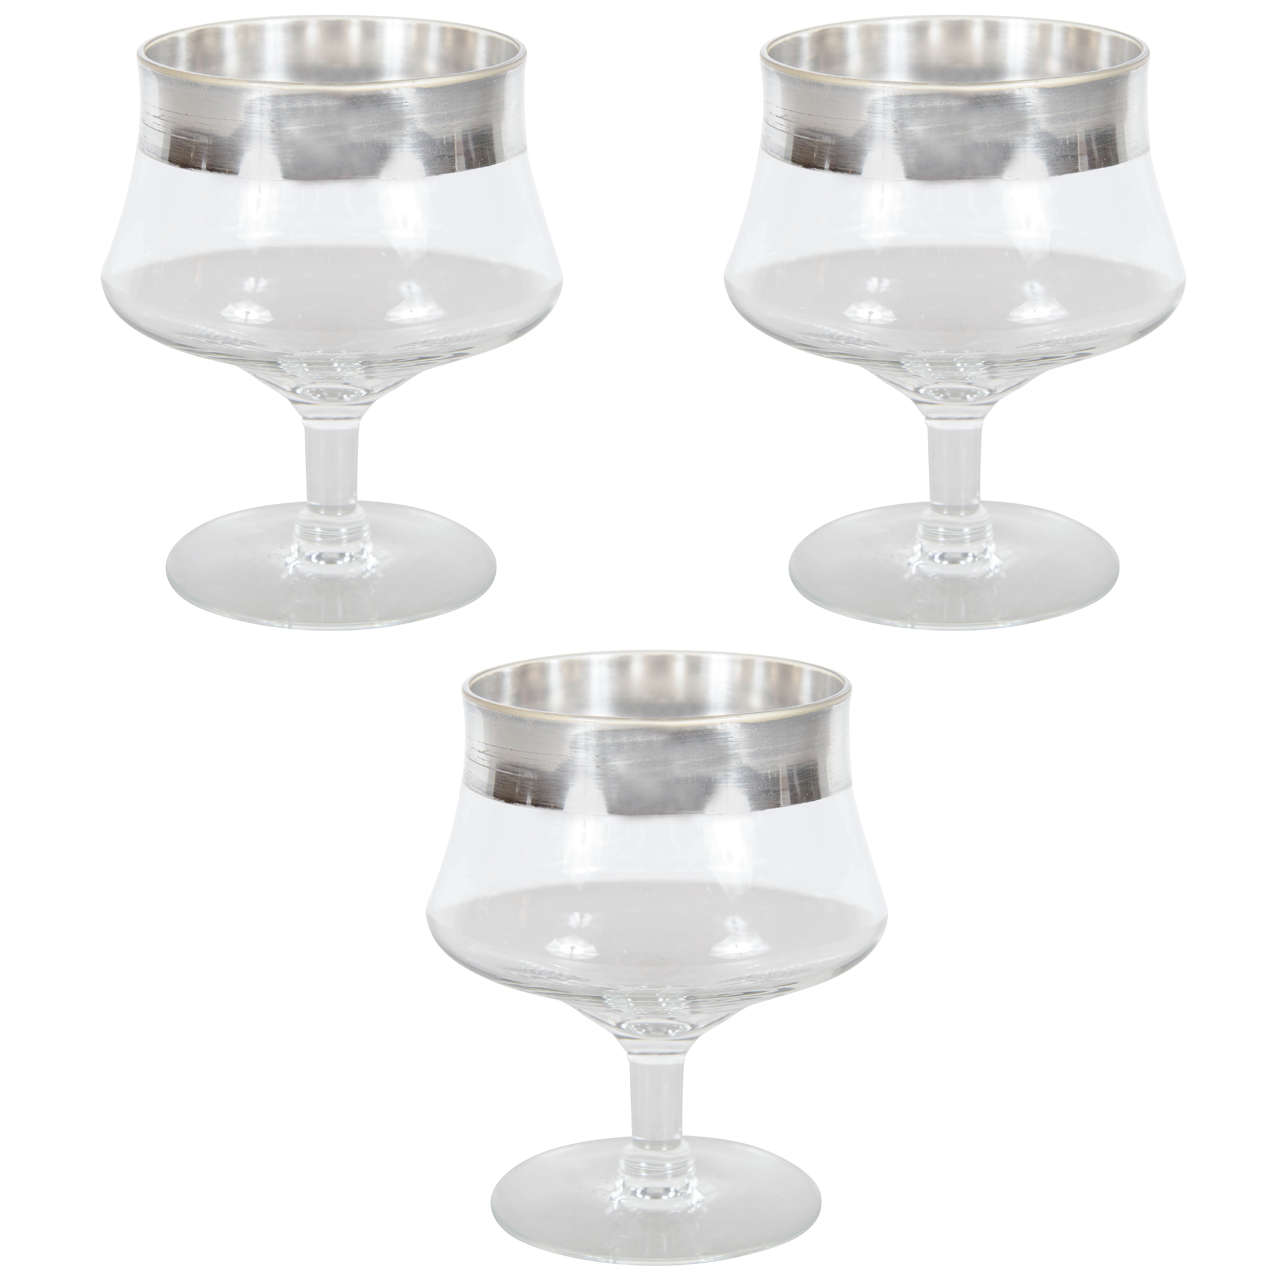 Set of Eight Elegant Desert Glasses with Sterling Banding by Dorothy Thorpe